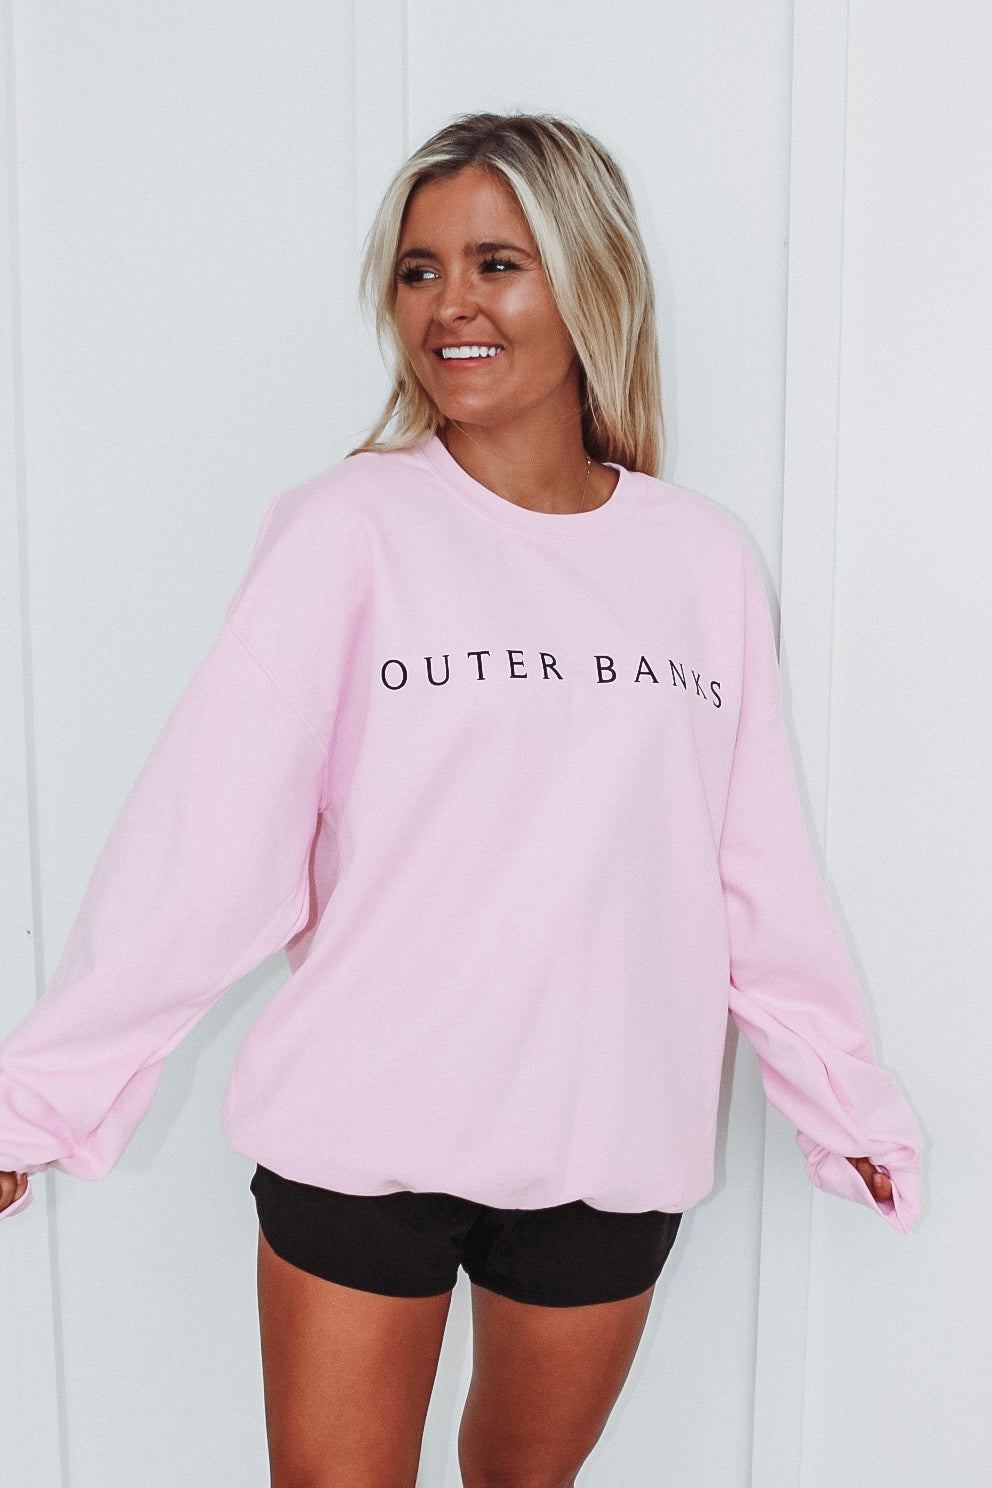 Outer banks Pink Crewneck Sweatshirt